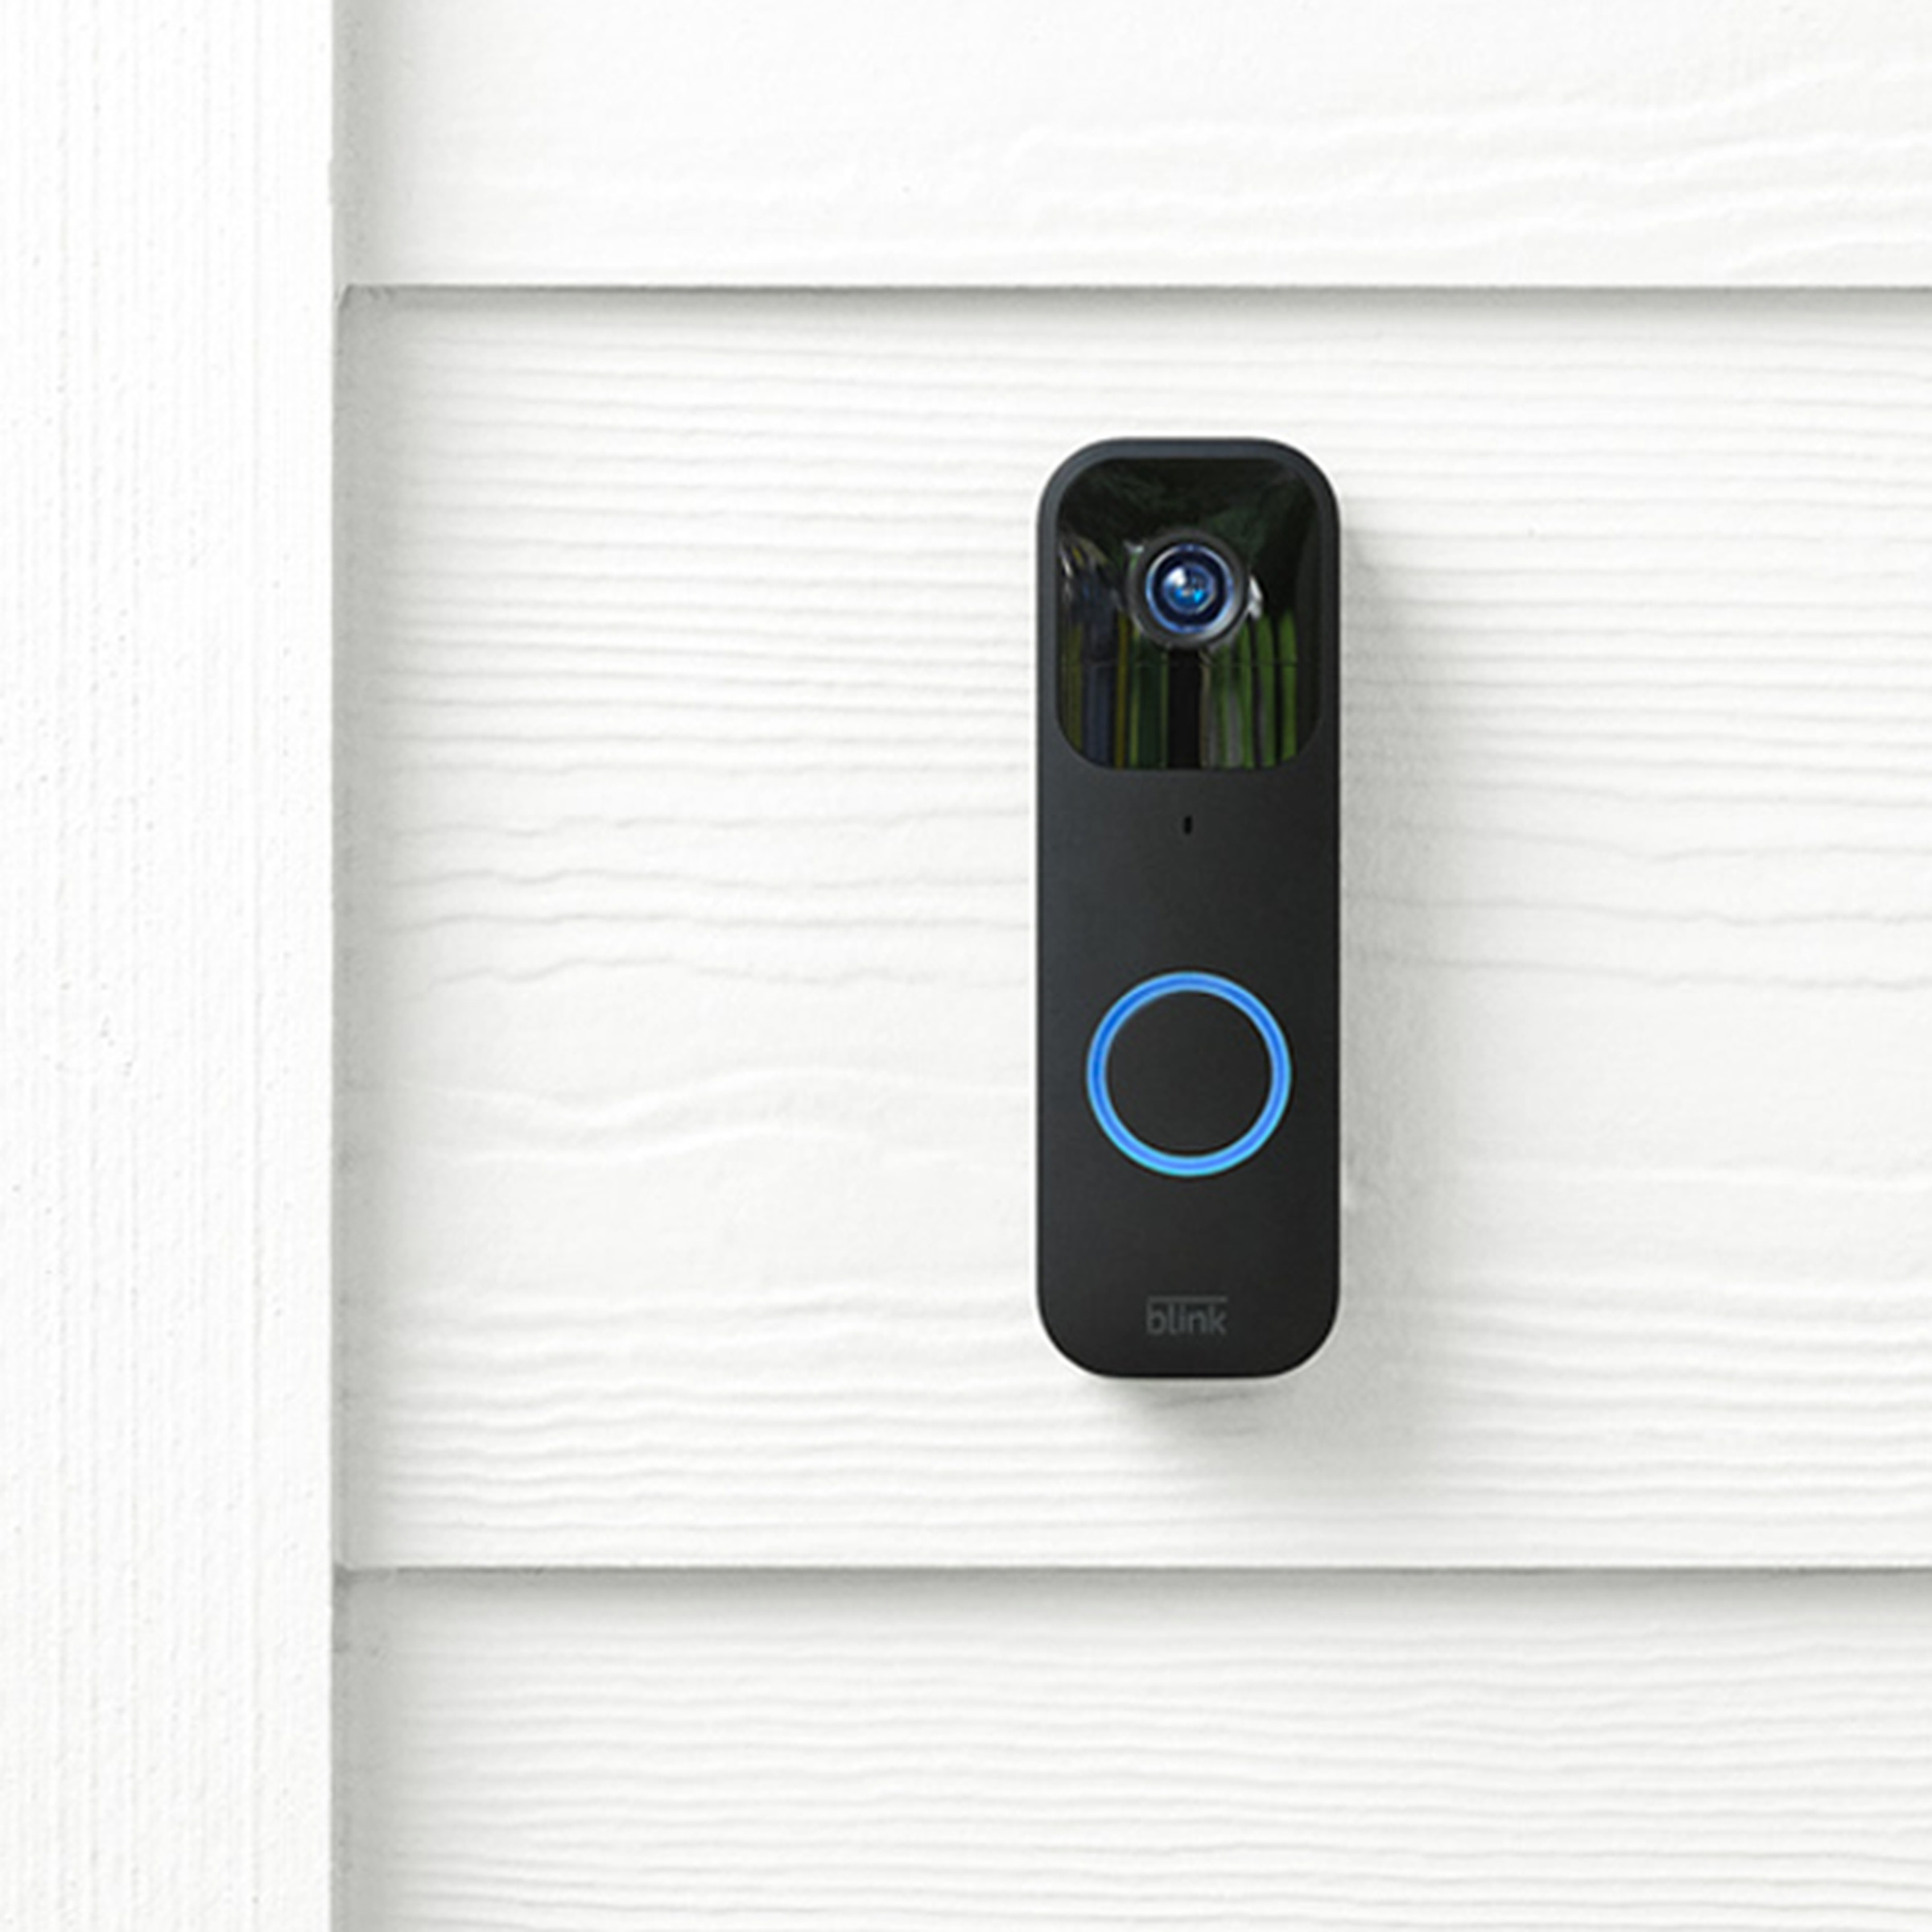 Blink video doorbell mounted on house